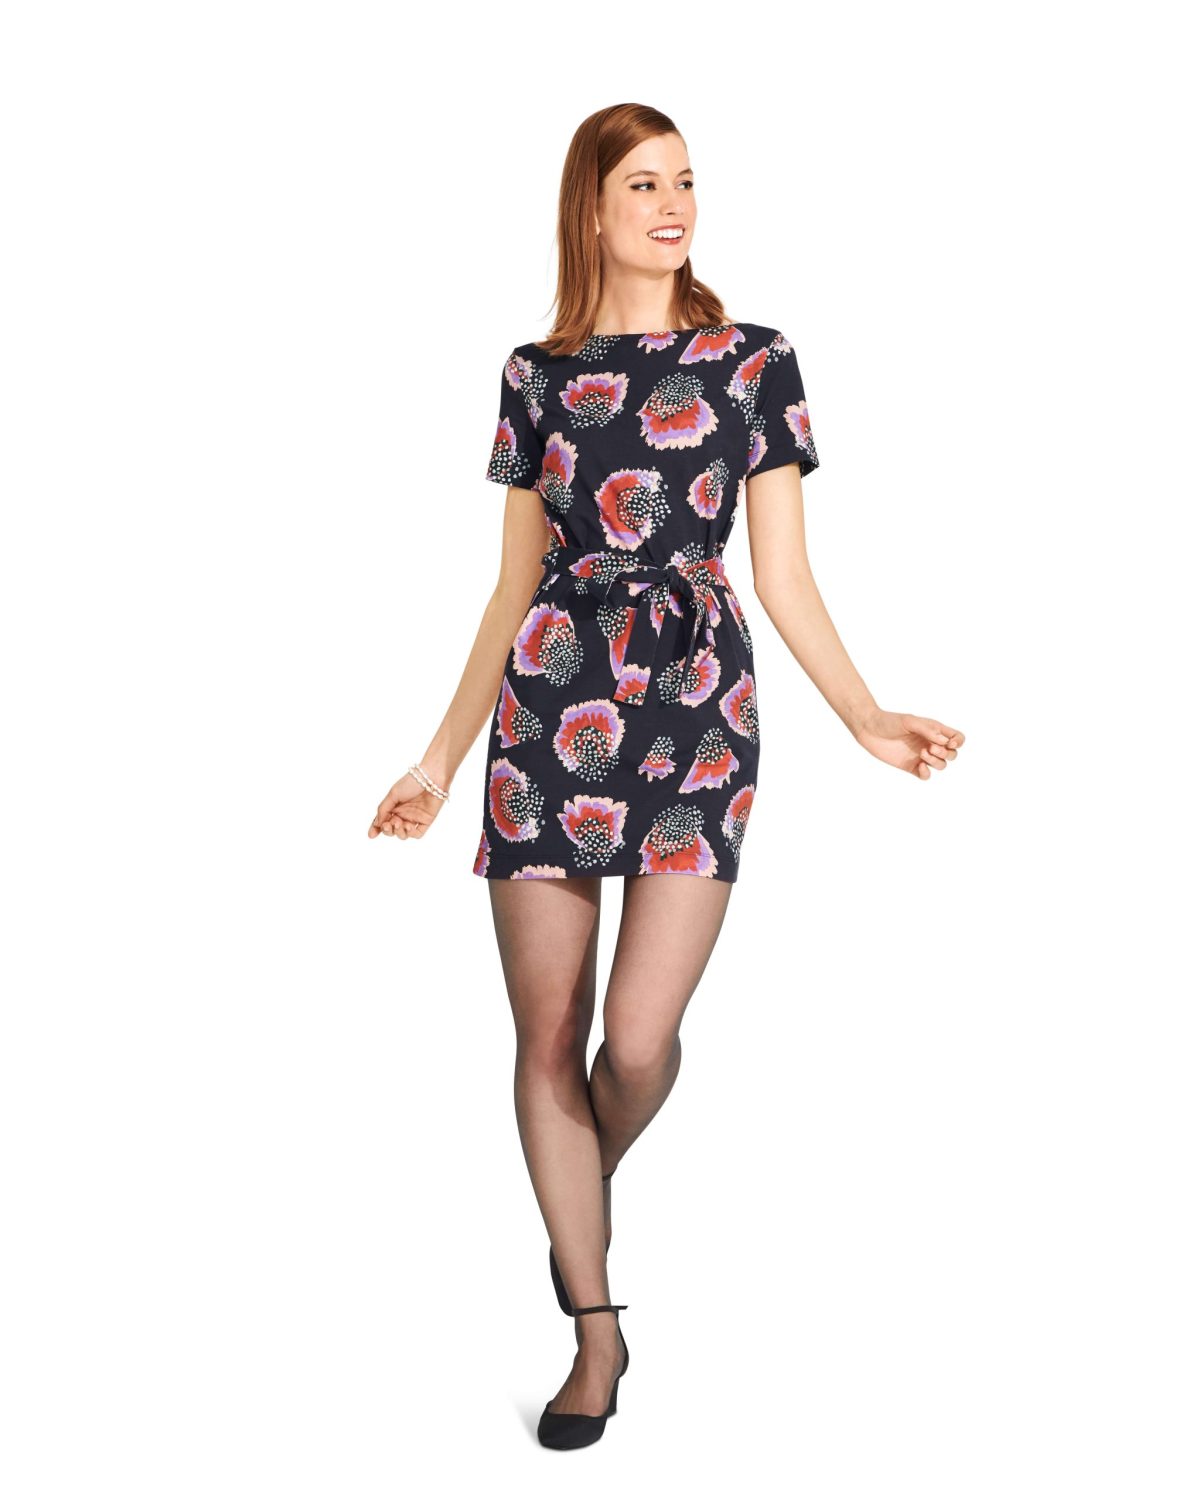 Burda Style Pattern 6087 Misses' Top, Tunic or Dress